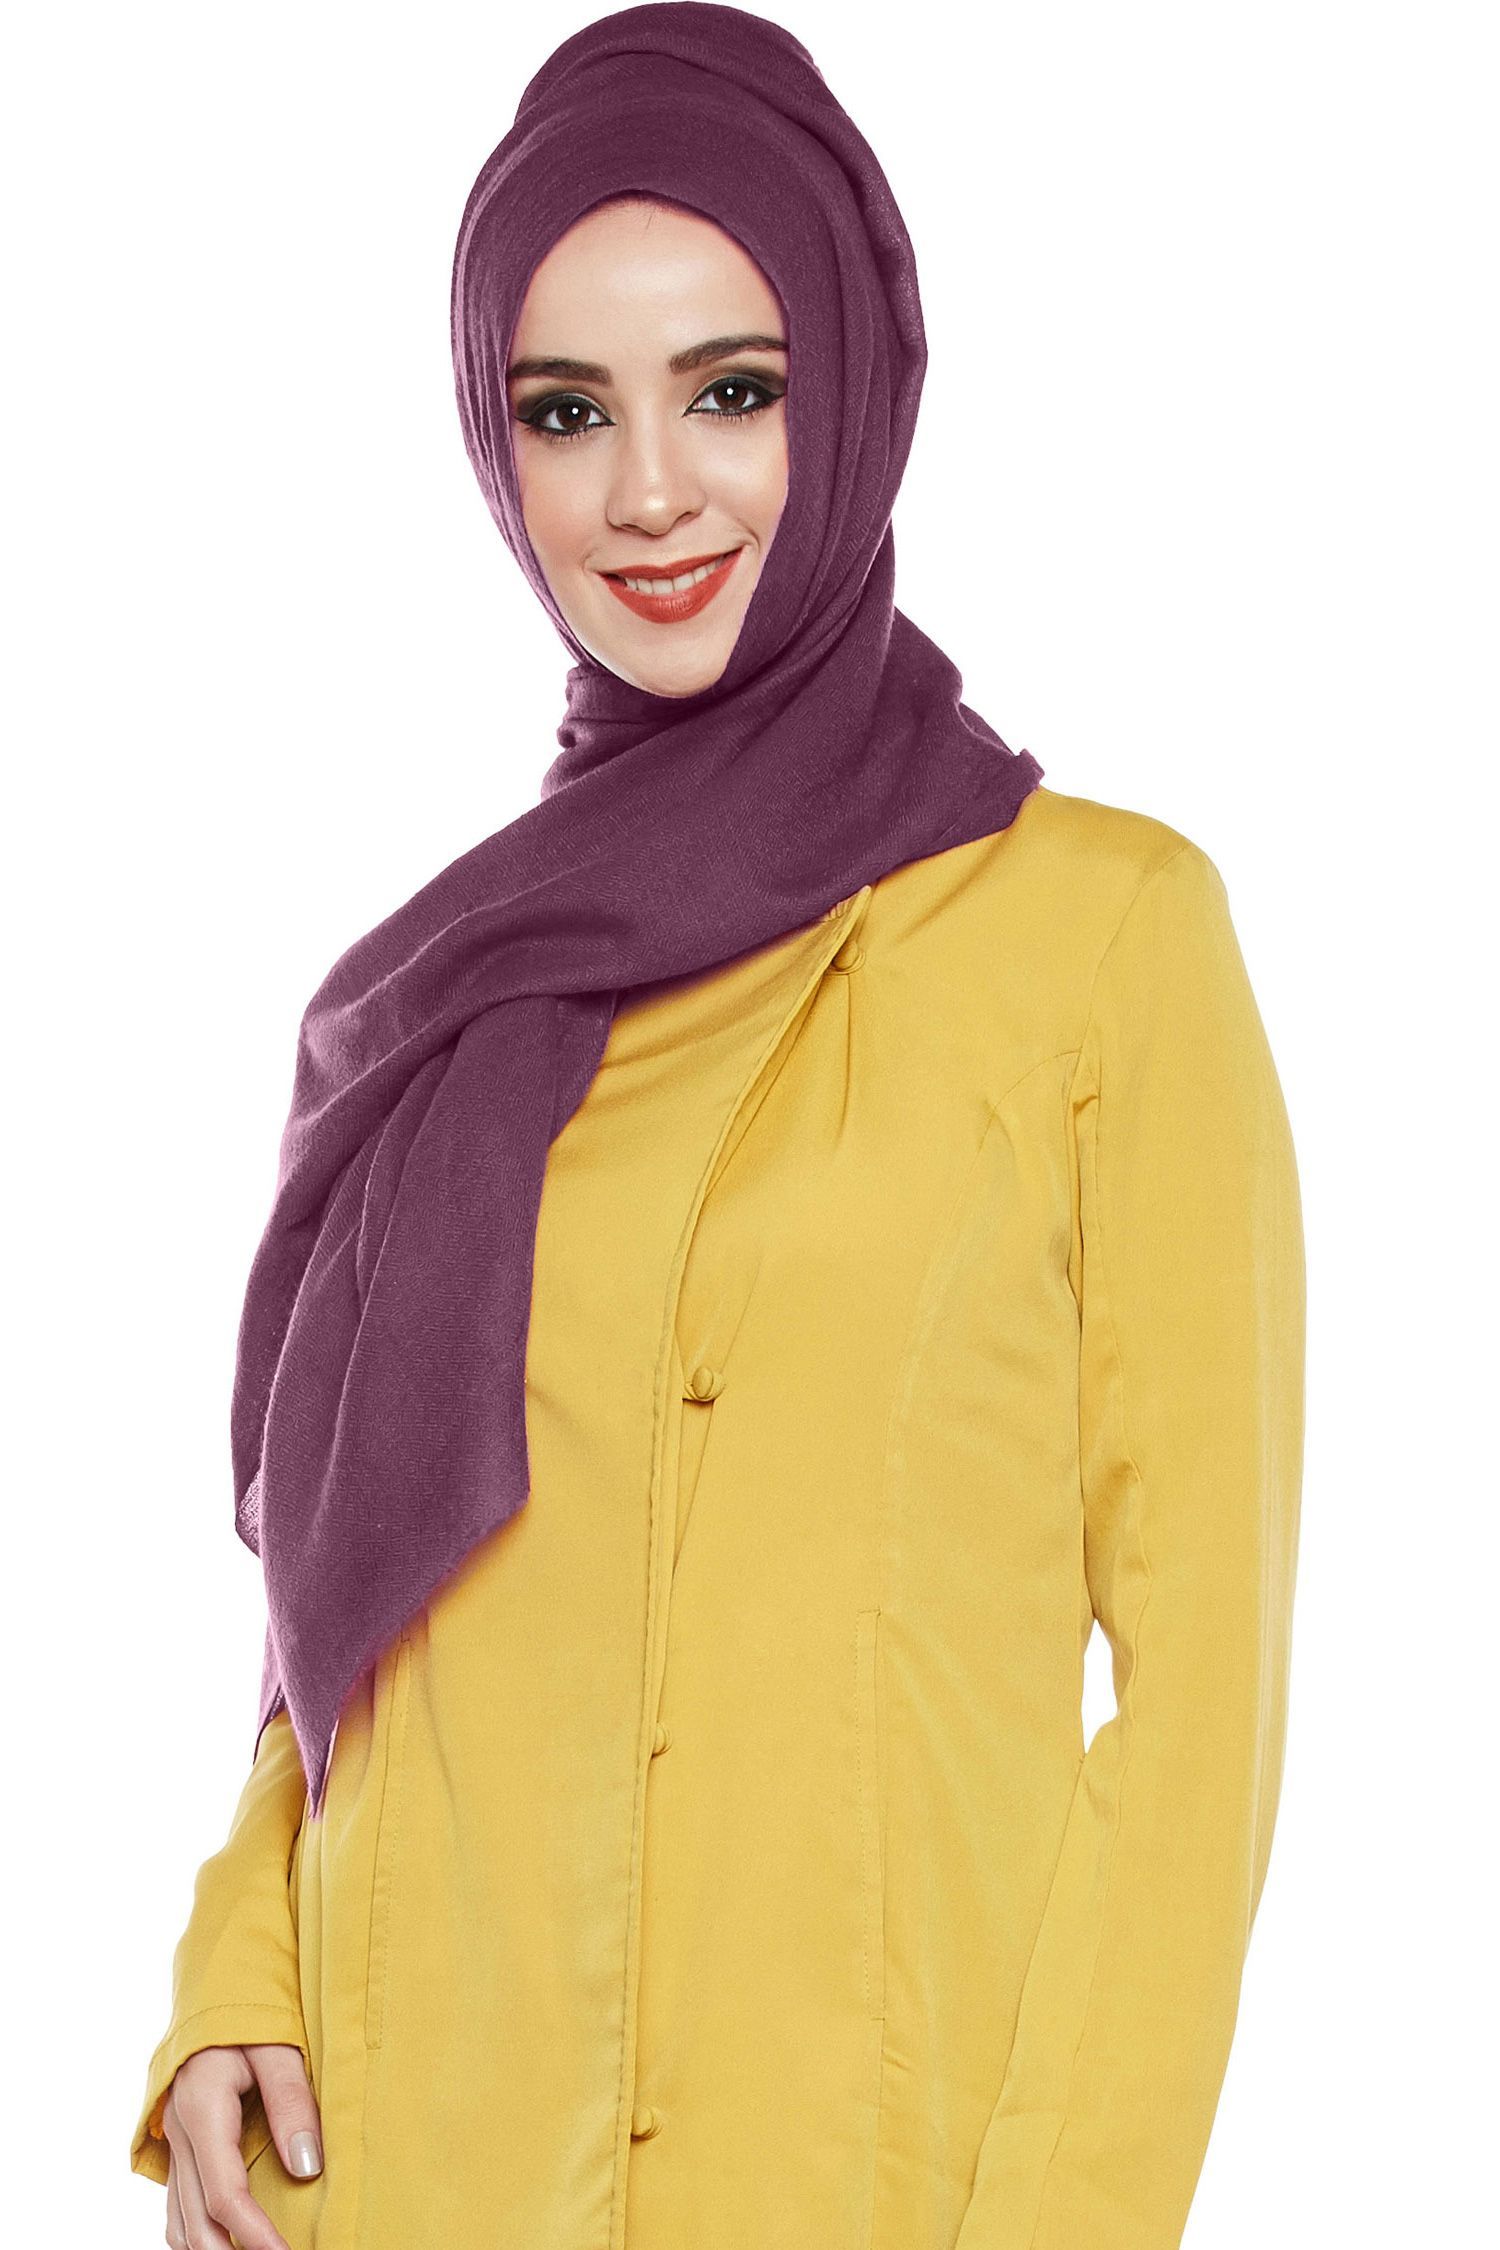 Wine Pashmina Hijab | Handmade Cashmere Head Scarf